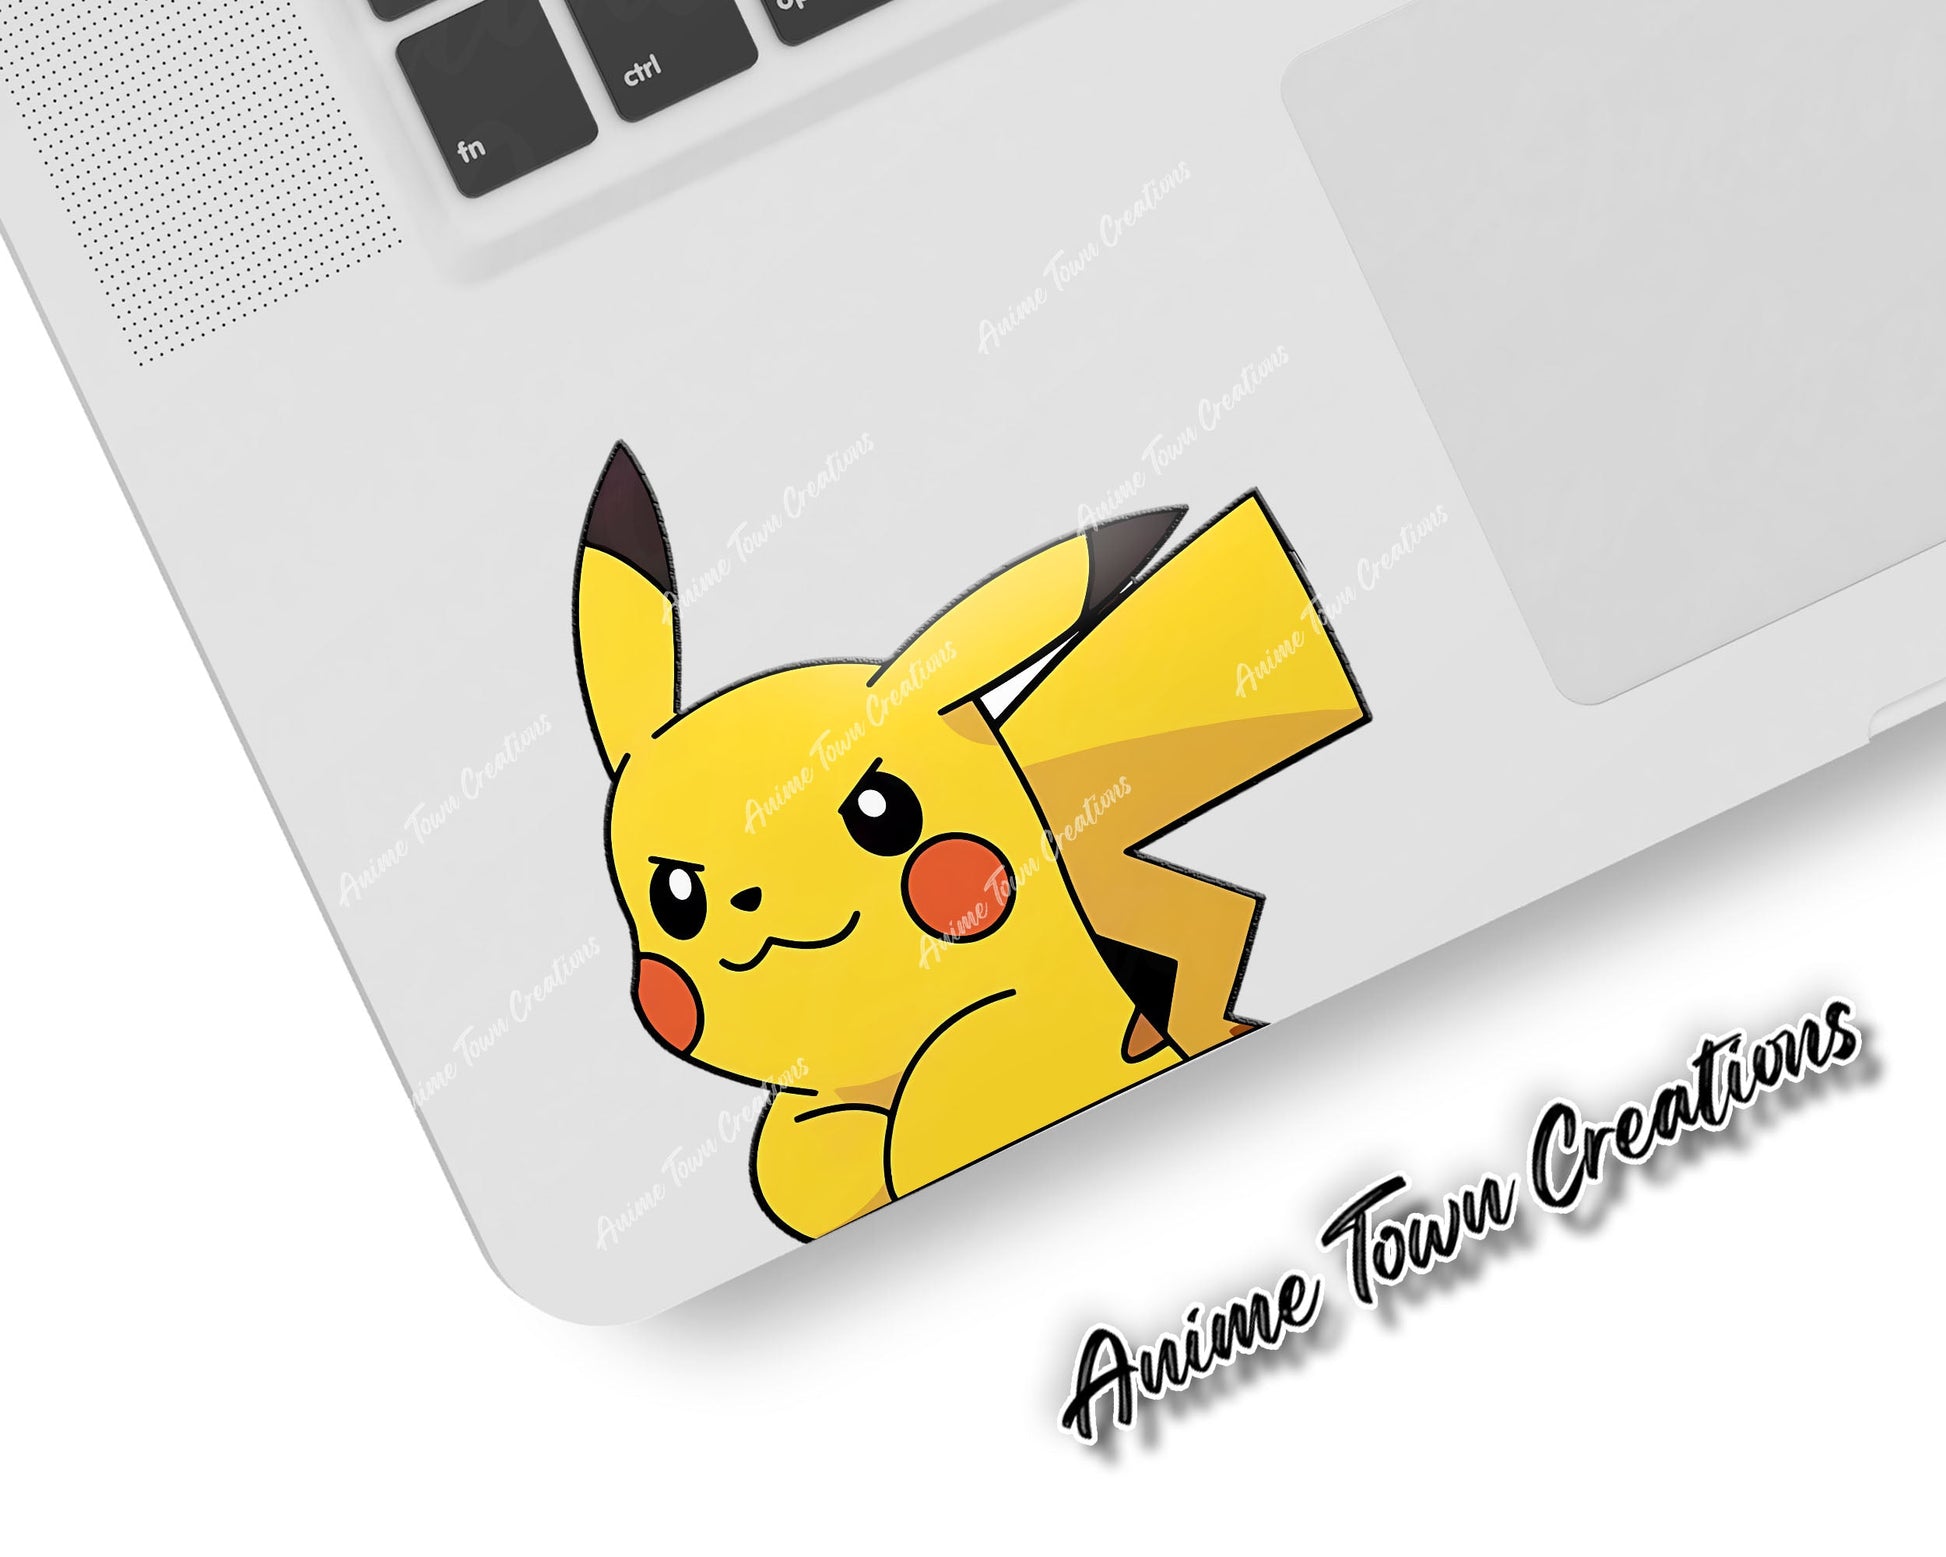 Anime Town Creations Sticker Pokemon Brave Pikachu Peeker 5" Accessories - Anime Pokemon Sticker